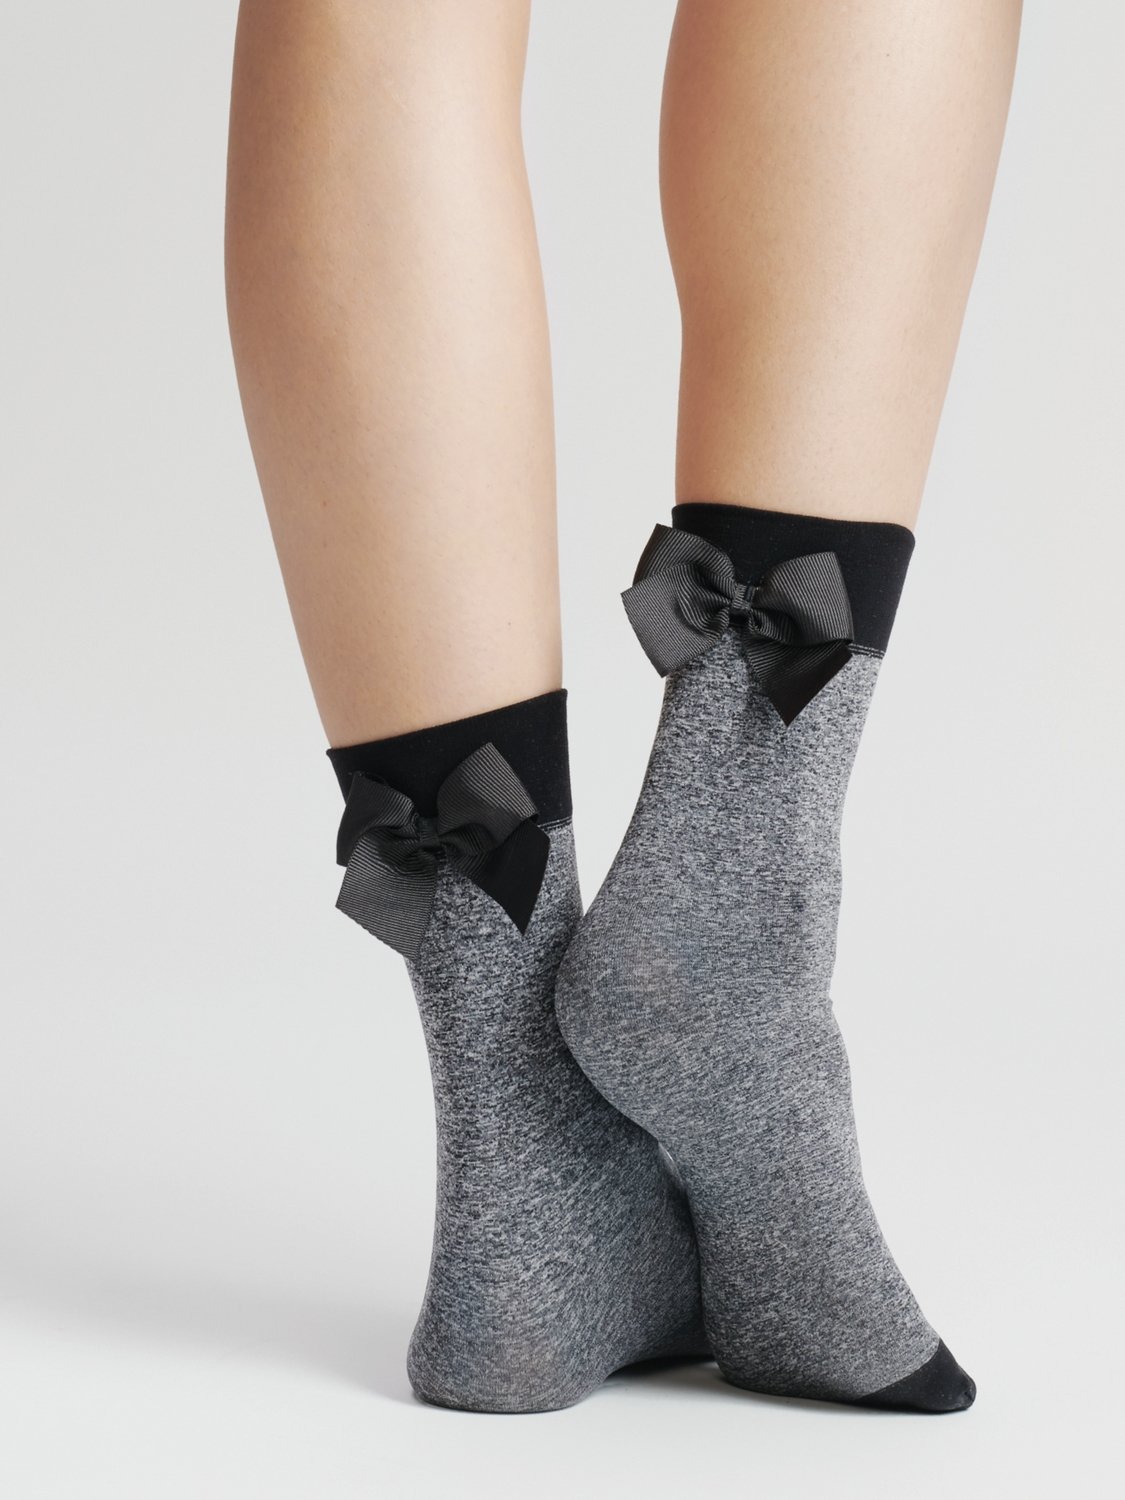 Fiore: Little Black Satin Bow 3D Melange Socks SOLD OUT